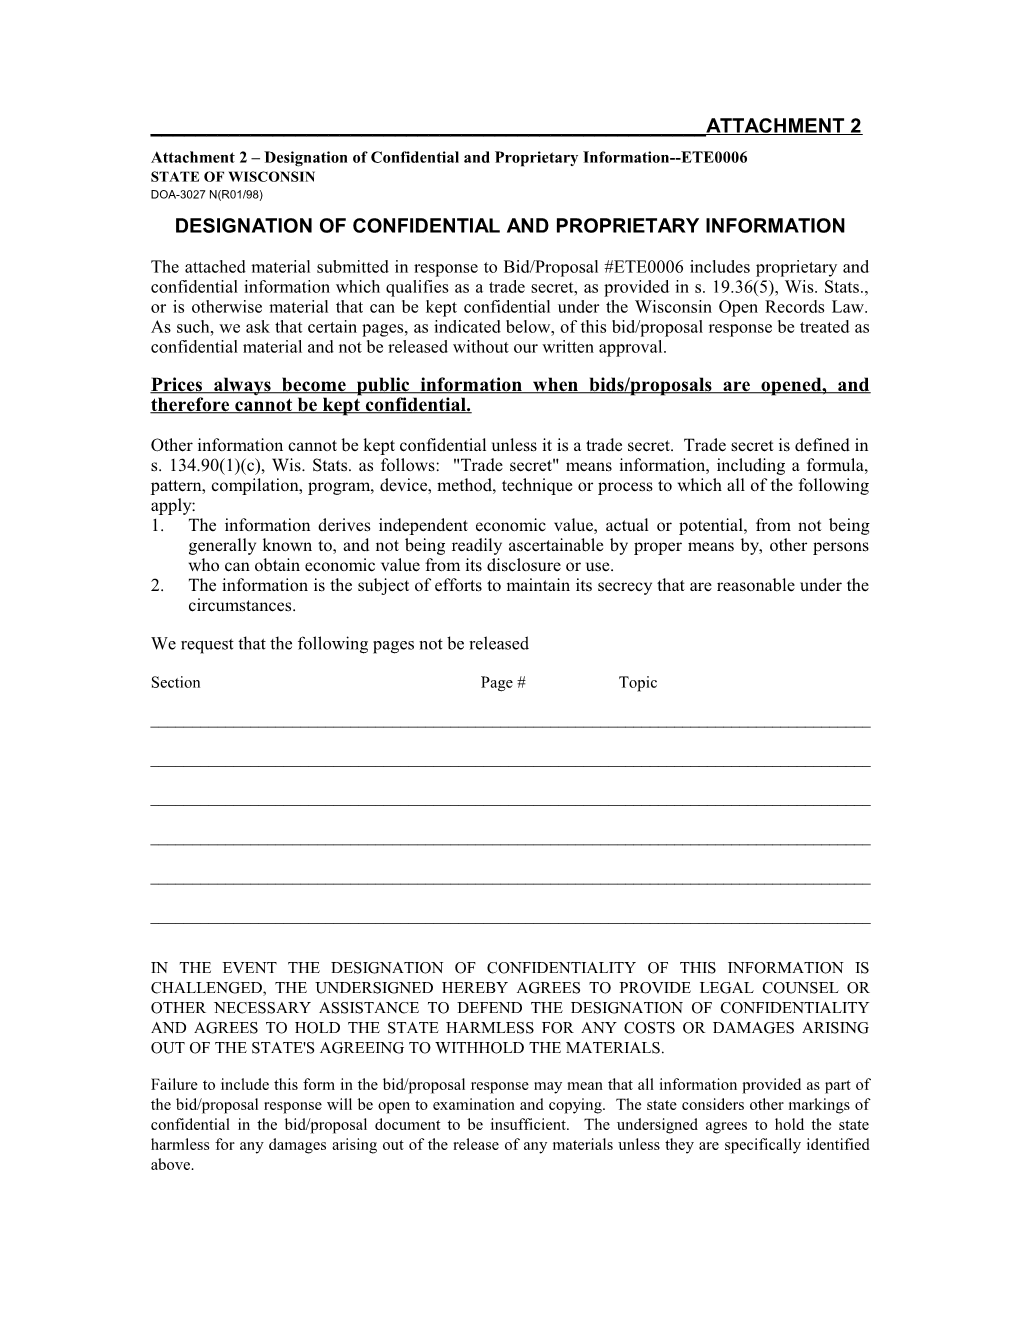 Attachment 2 Designation of Confidential and Proprietary Information ETE0006